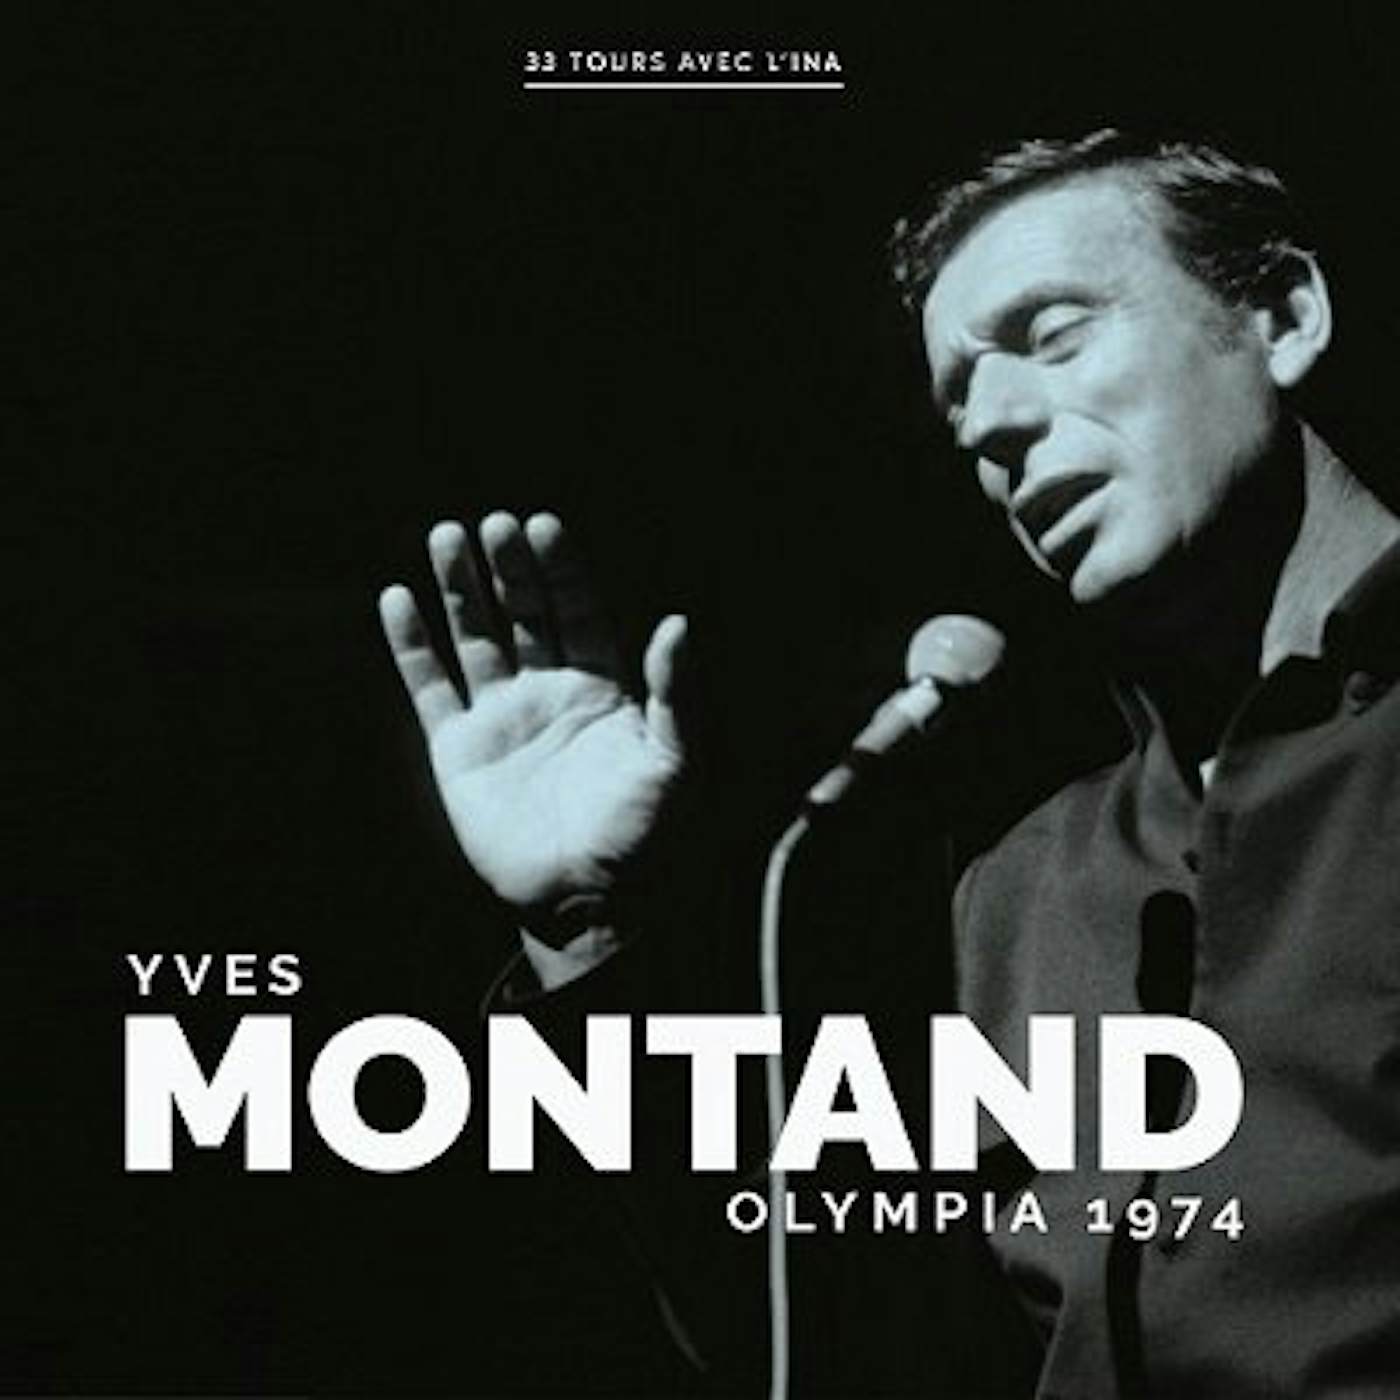 Yves Montand Olympia 1974 vinyl record